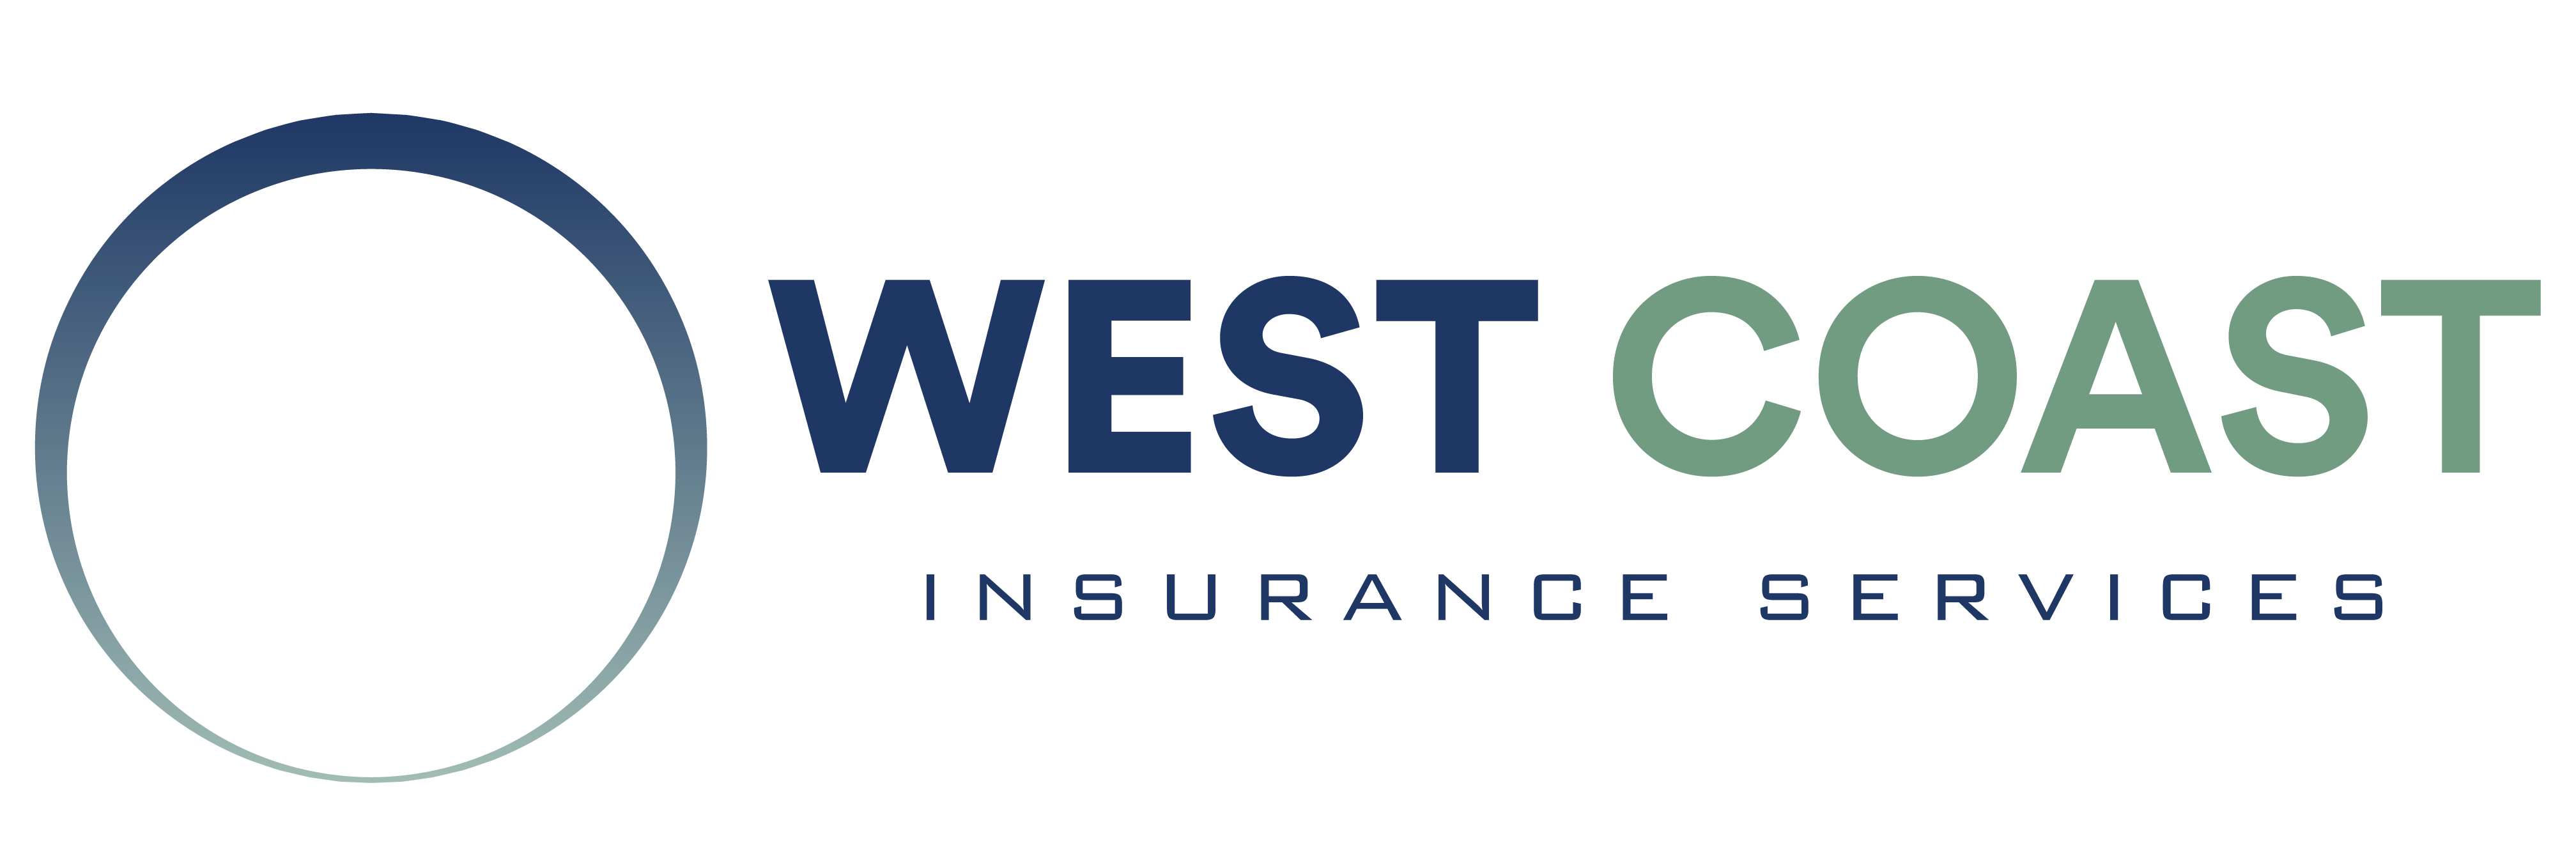 West Coast Insurance Services